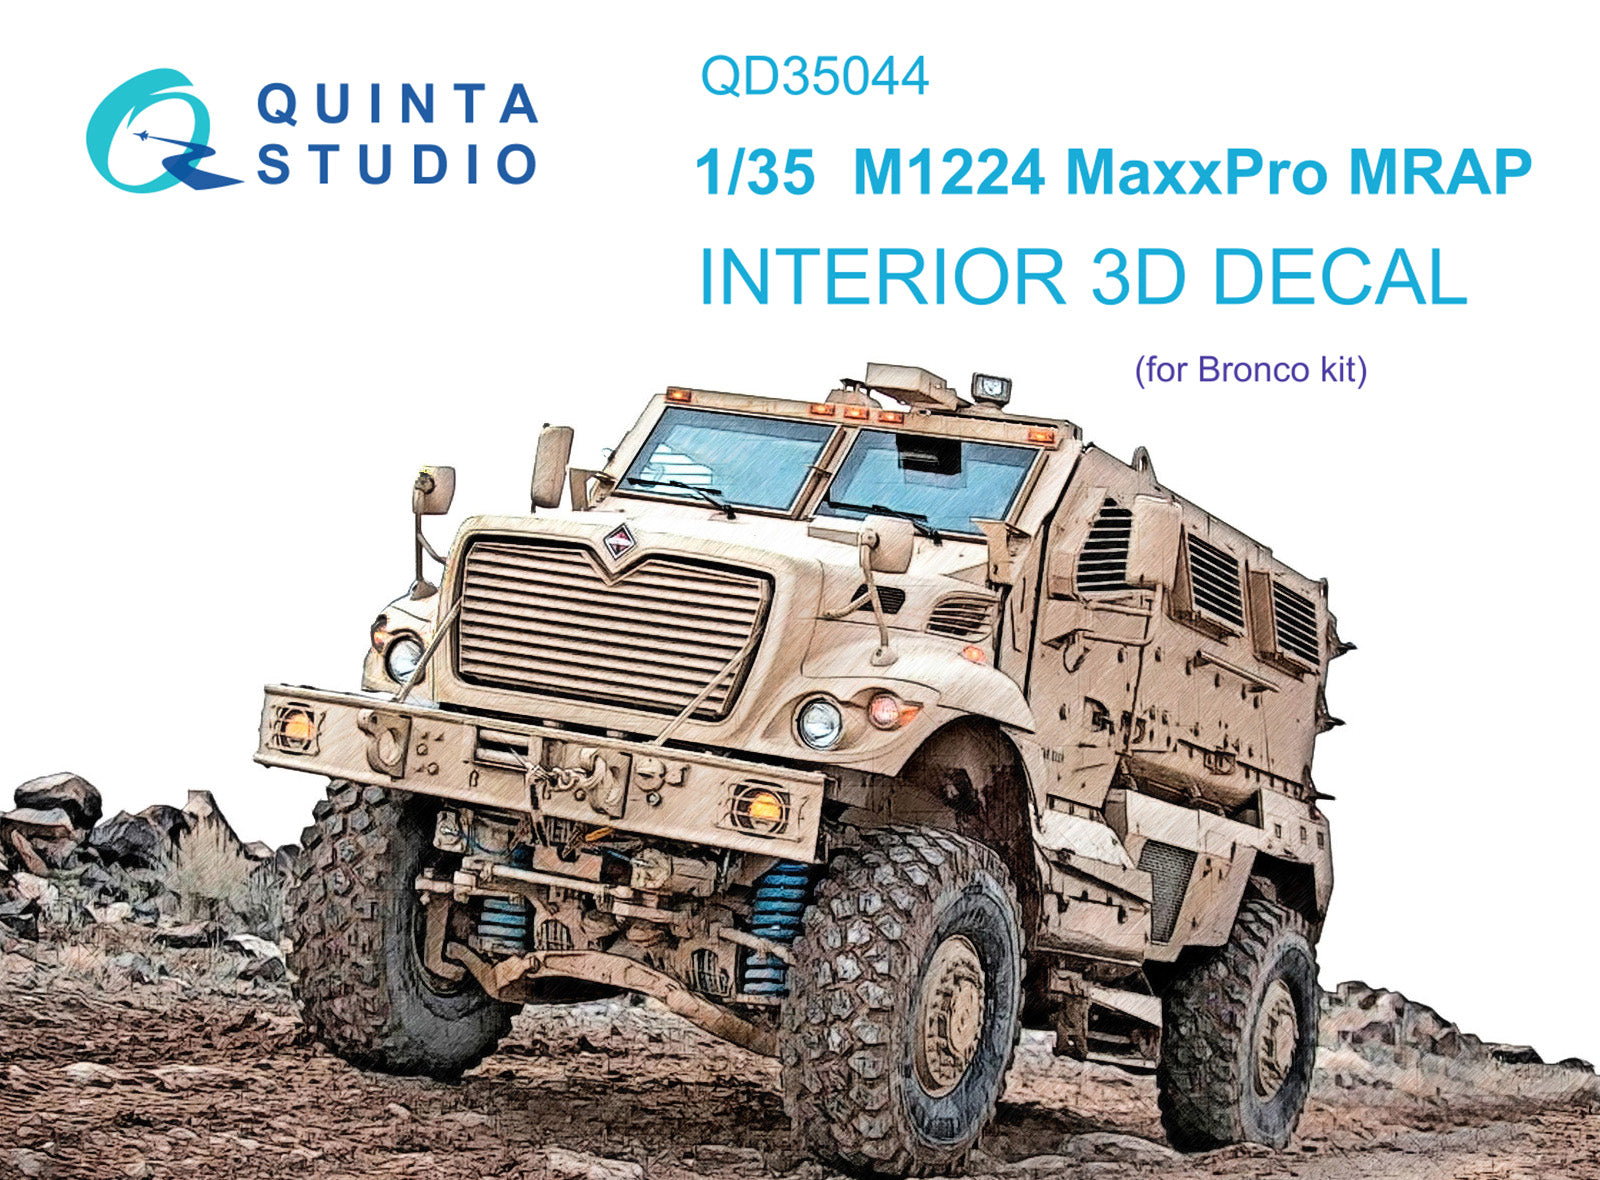 Quinta Studio - 1/35 M1224 MaxxPro MRAP QD35044 for Bronco kit